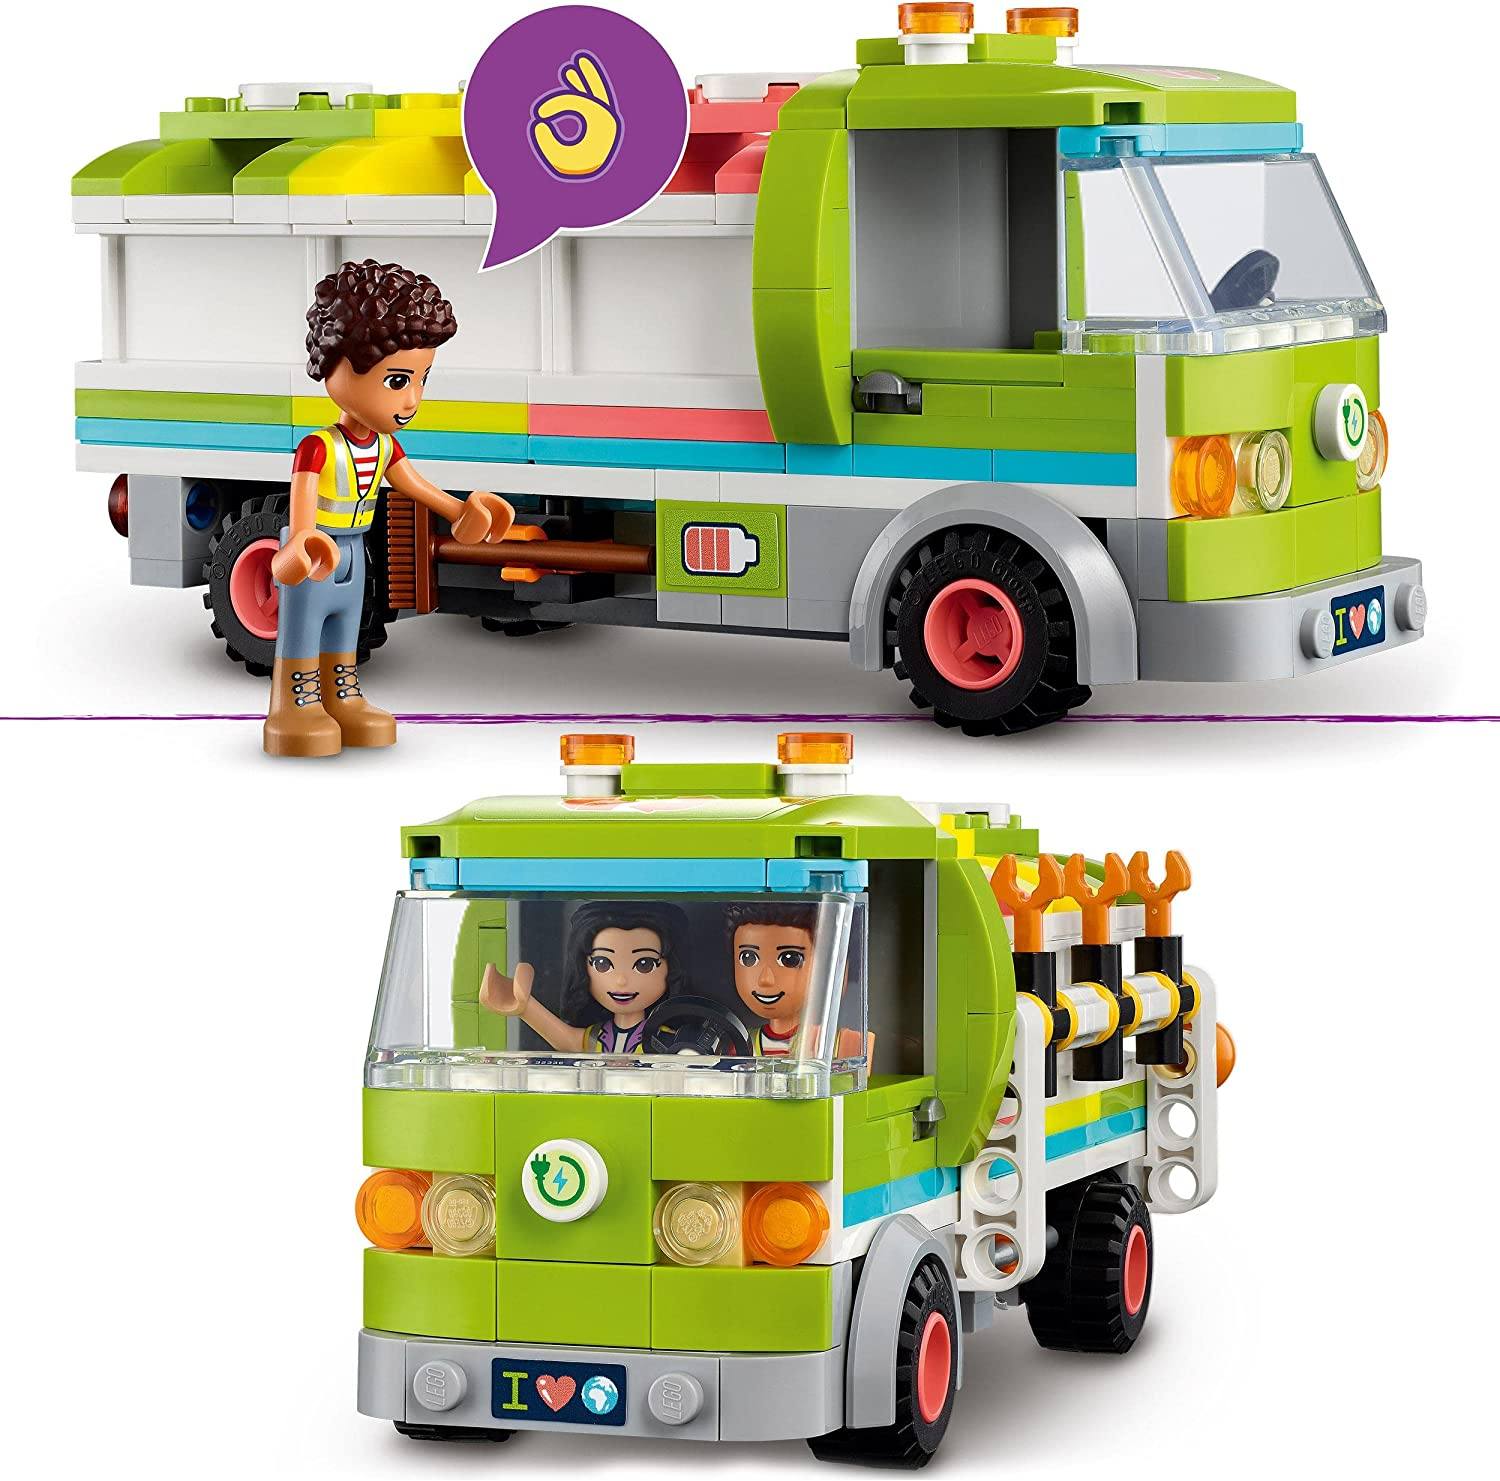 LEGO FRIENDS 41712 Camion Riciclaggio Rifiuti LEGO 